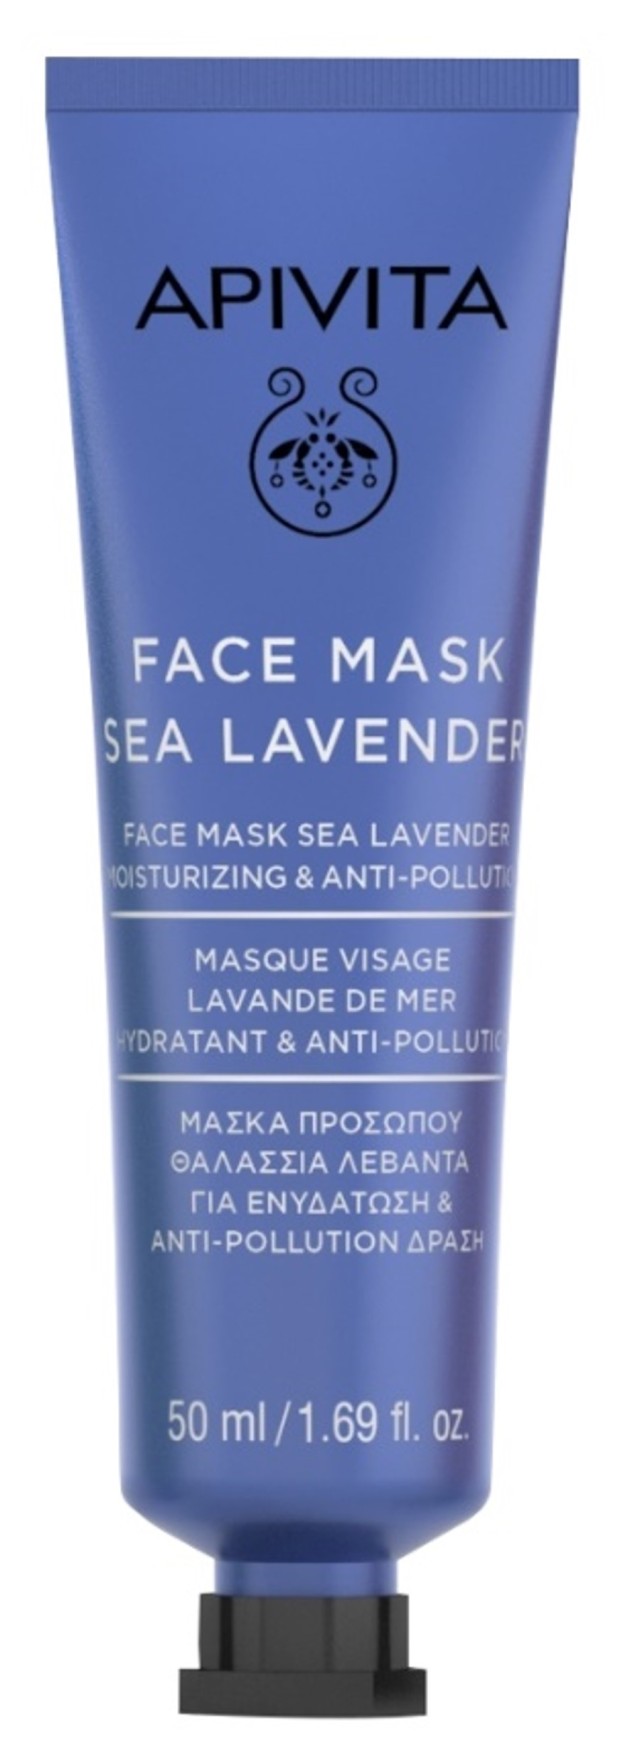 Apivita Face Mask with Sea Lavender Μάσκα με Θαλάσσια Λεβάντα για Ενυδάτωση & Anti-pollution Δράση, 50 ml